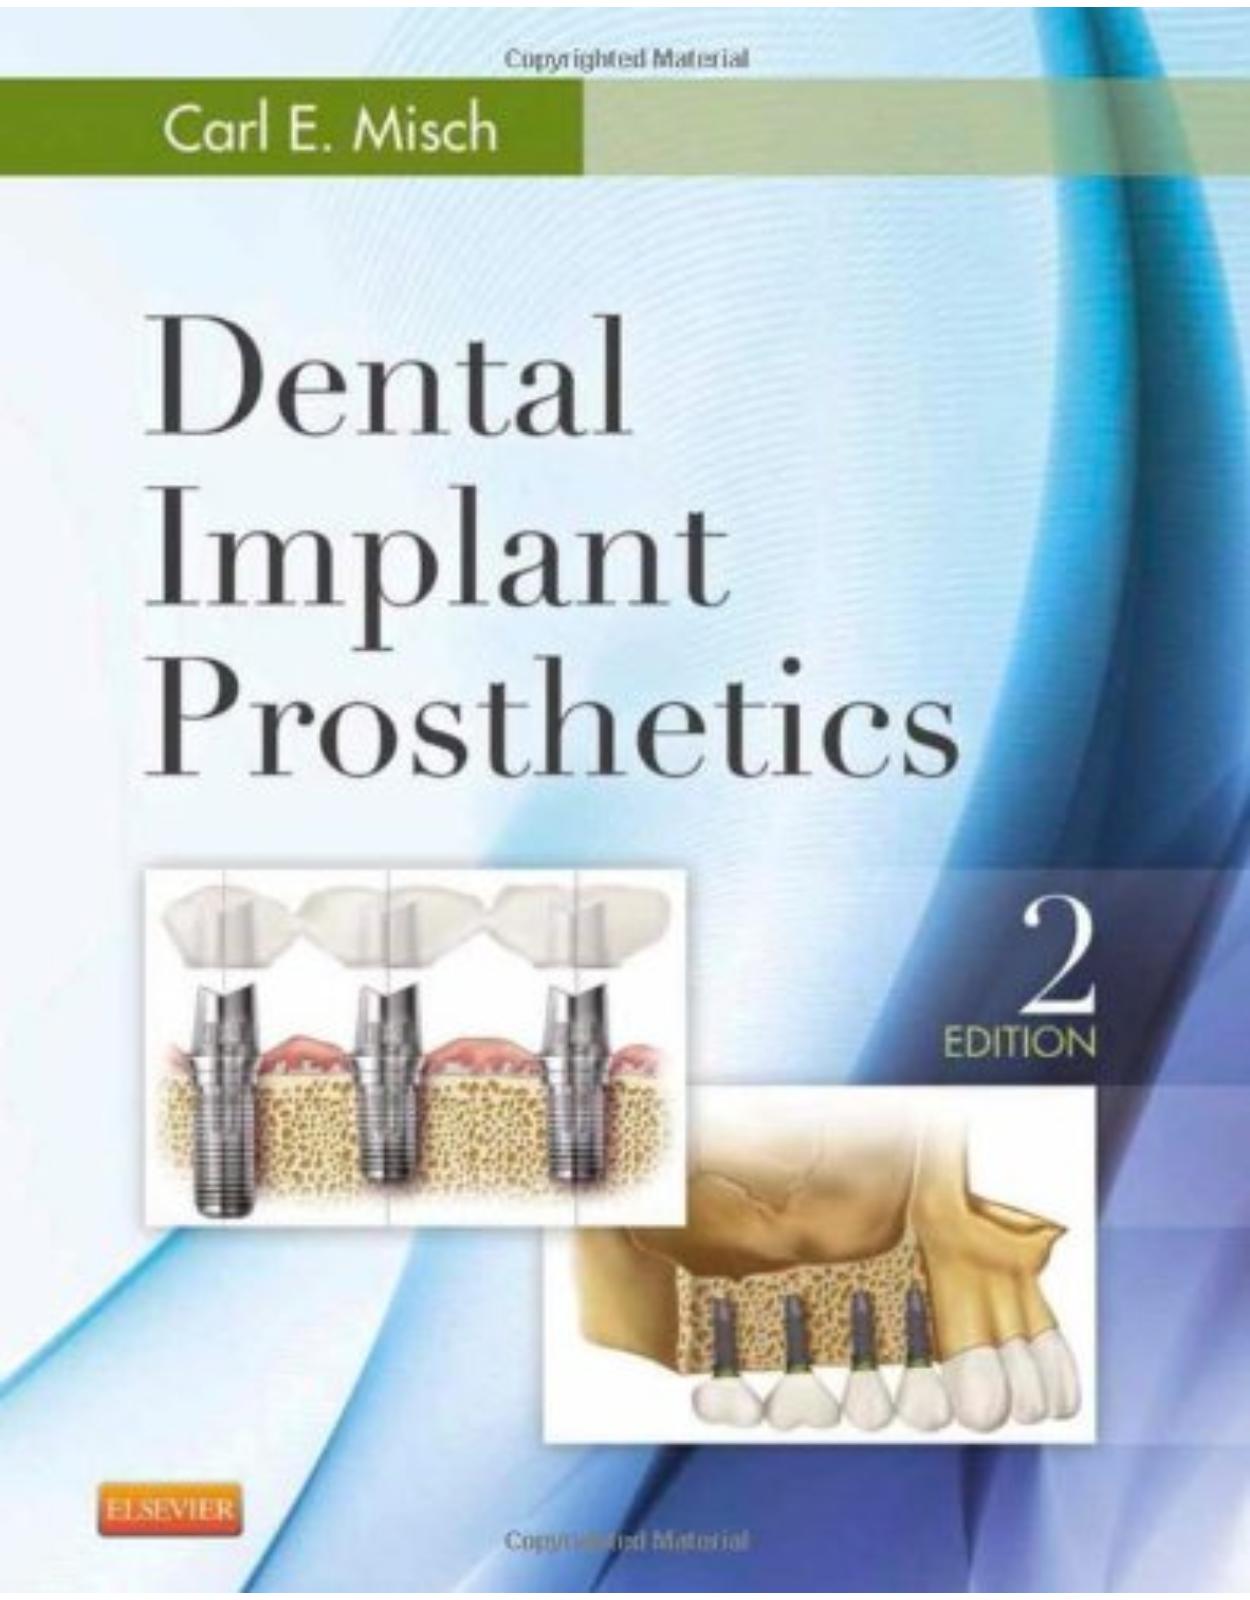 Dental Implant Prosthetics, 2nd Edition